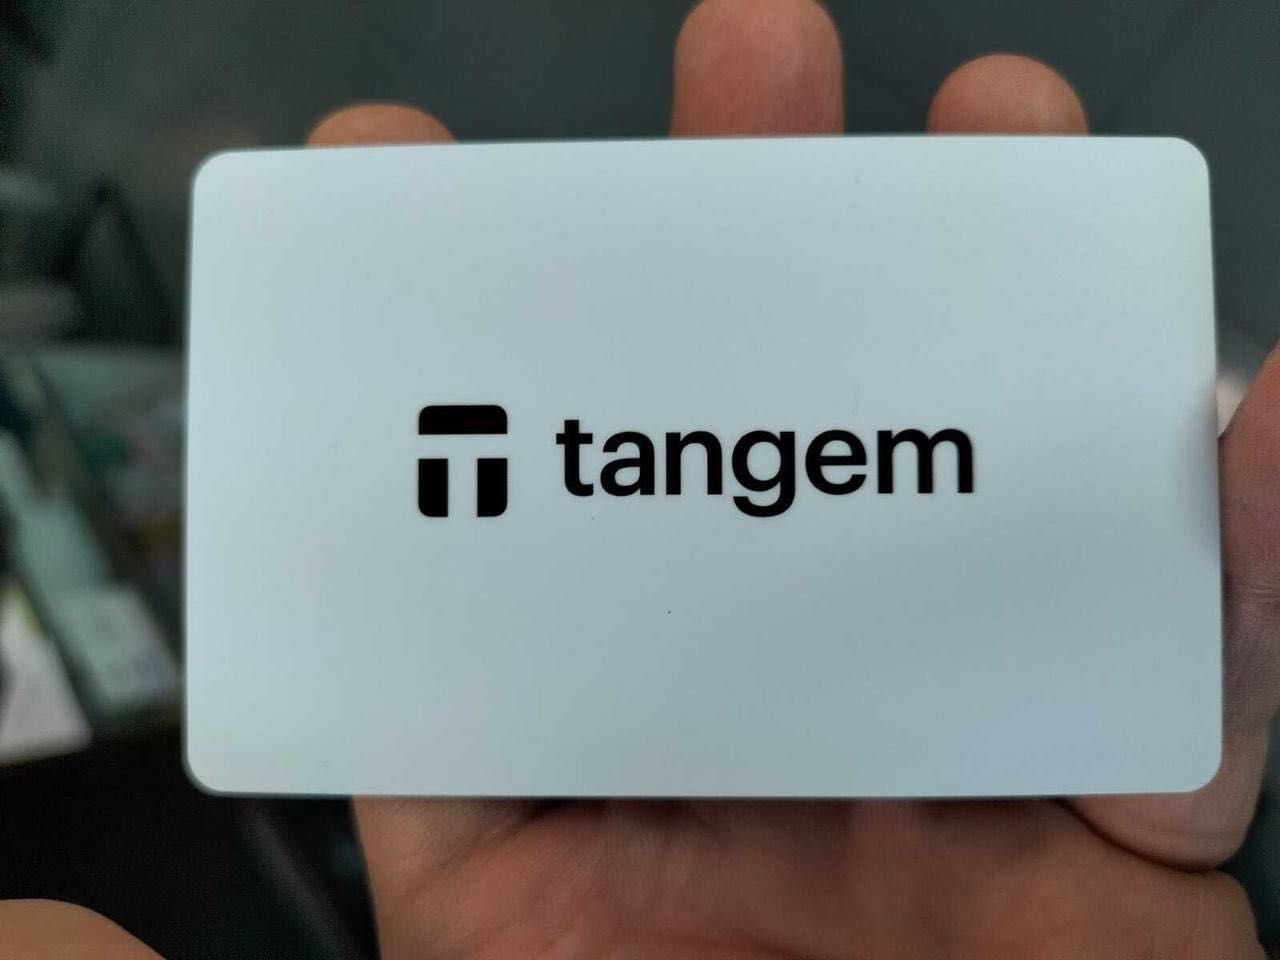 Аппаратный кошелек Tangem 2.0 (3 карты)